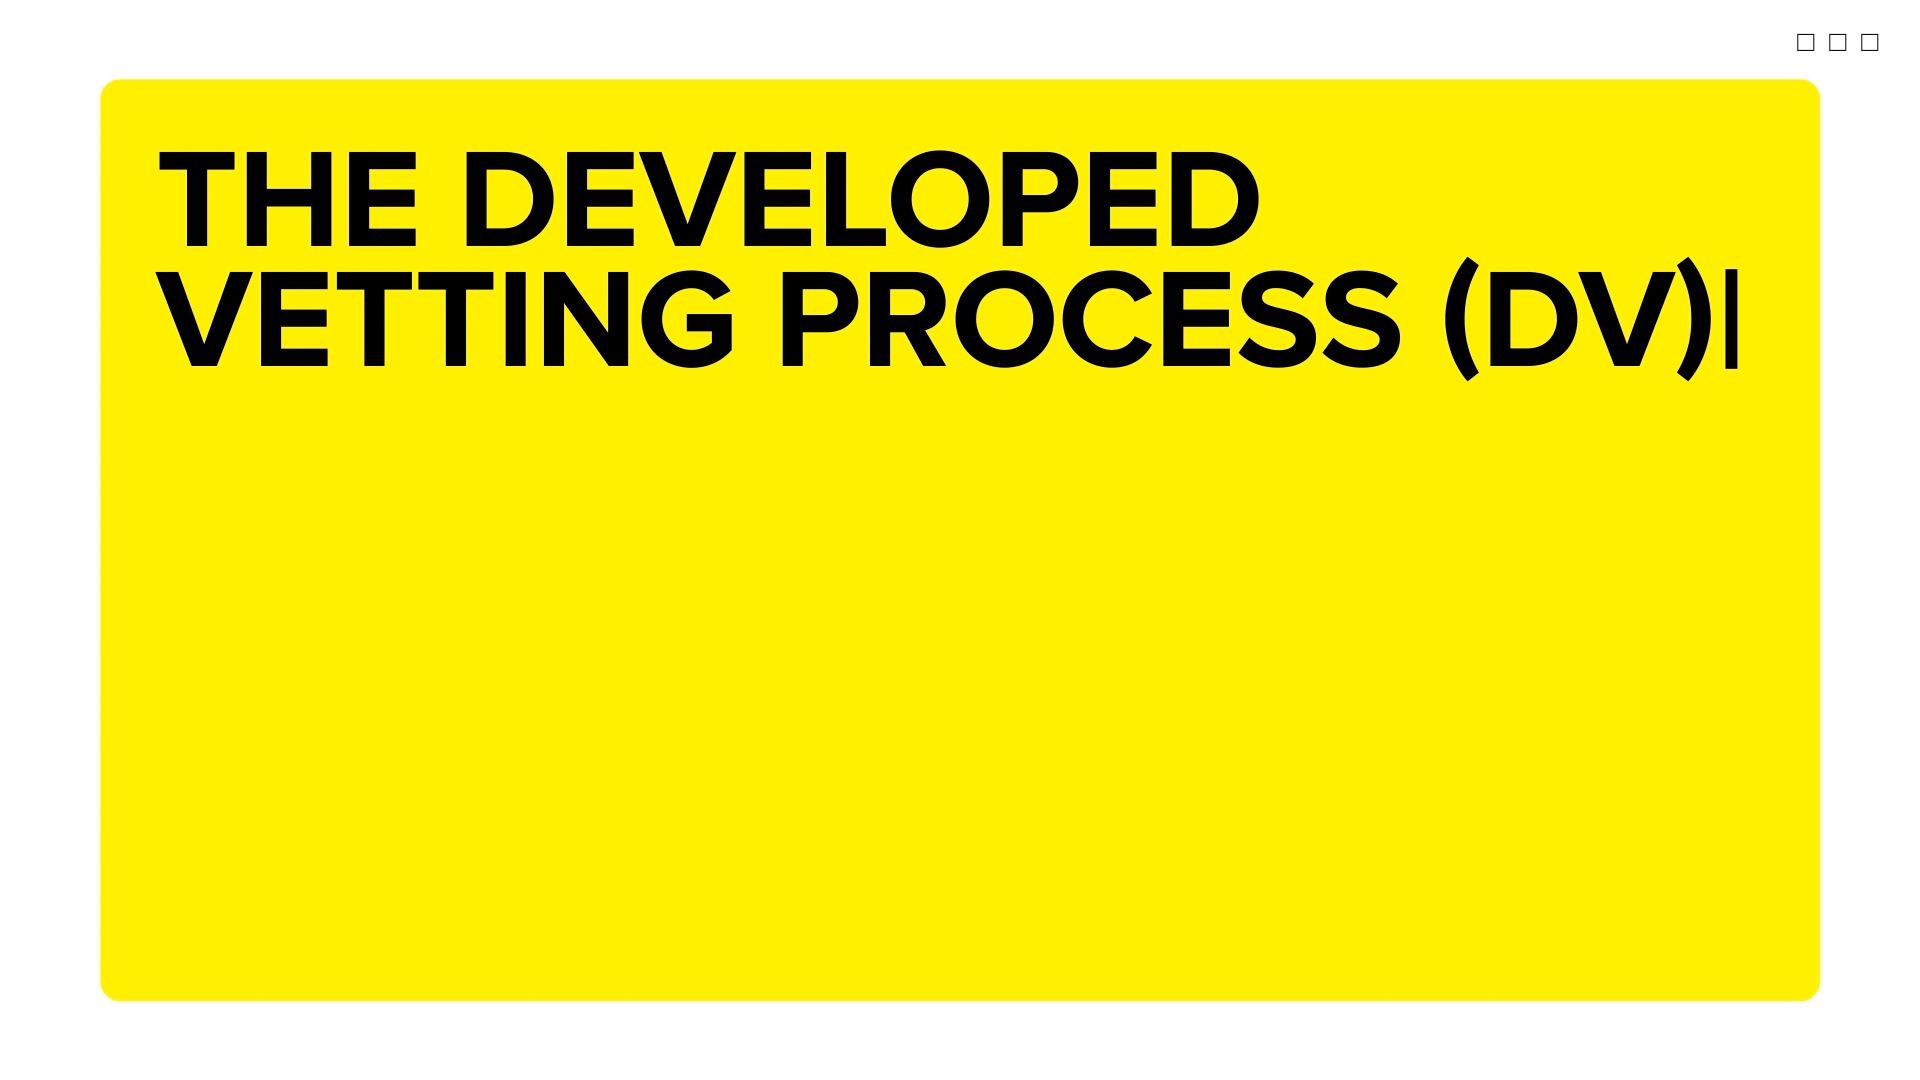 The Developed Vetting Process (DV)